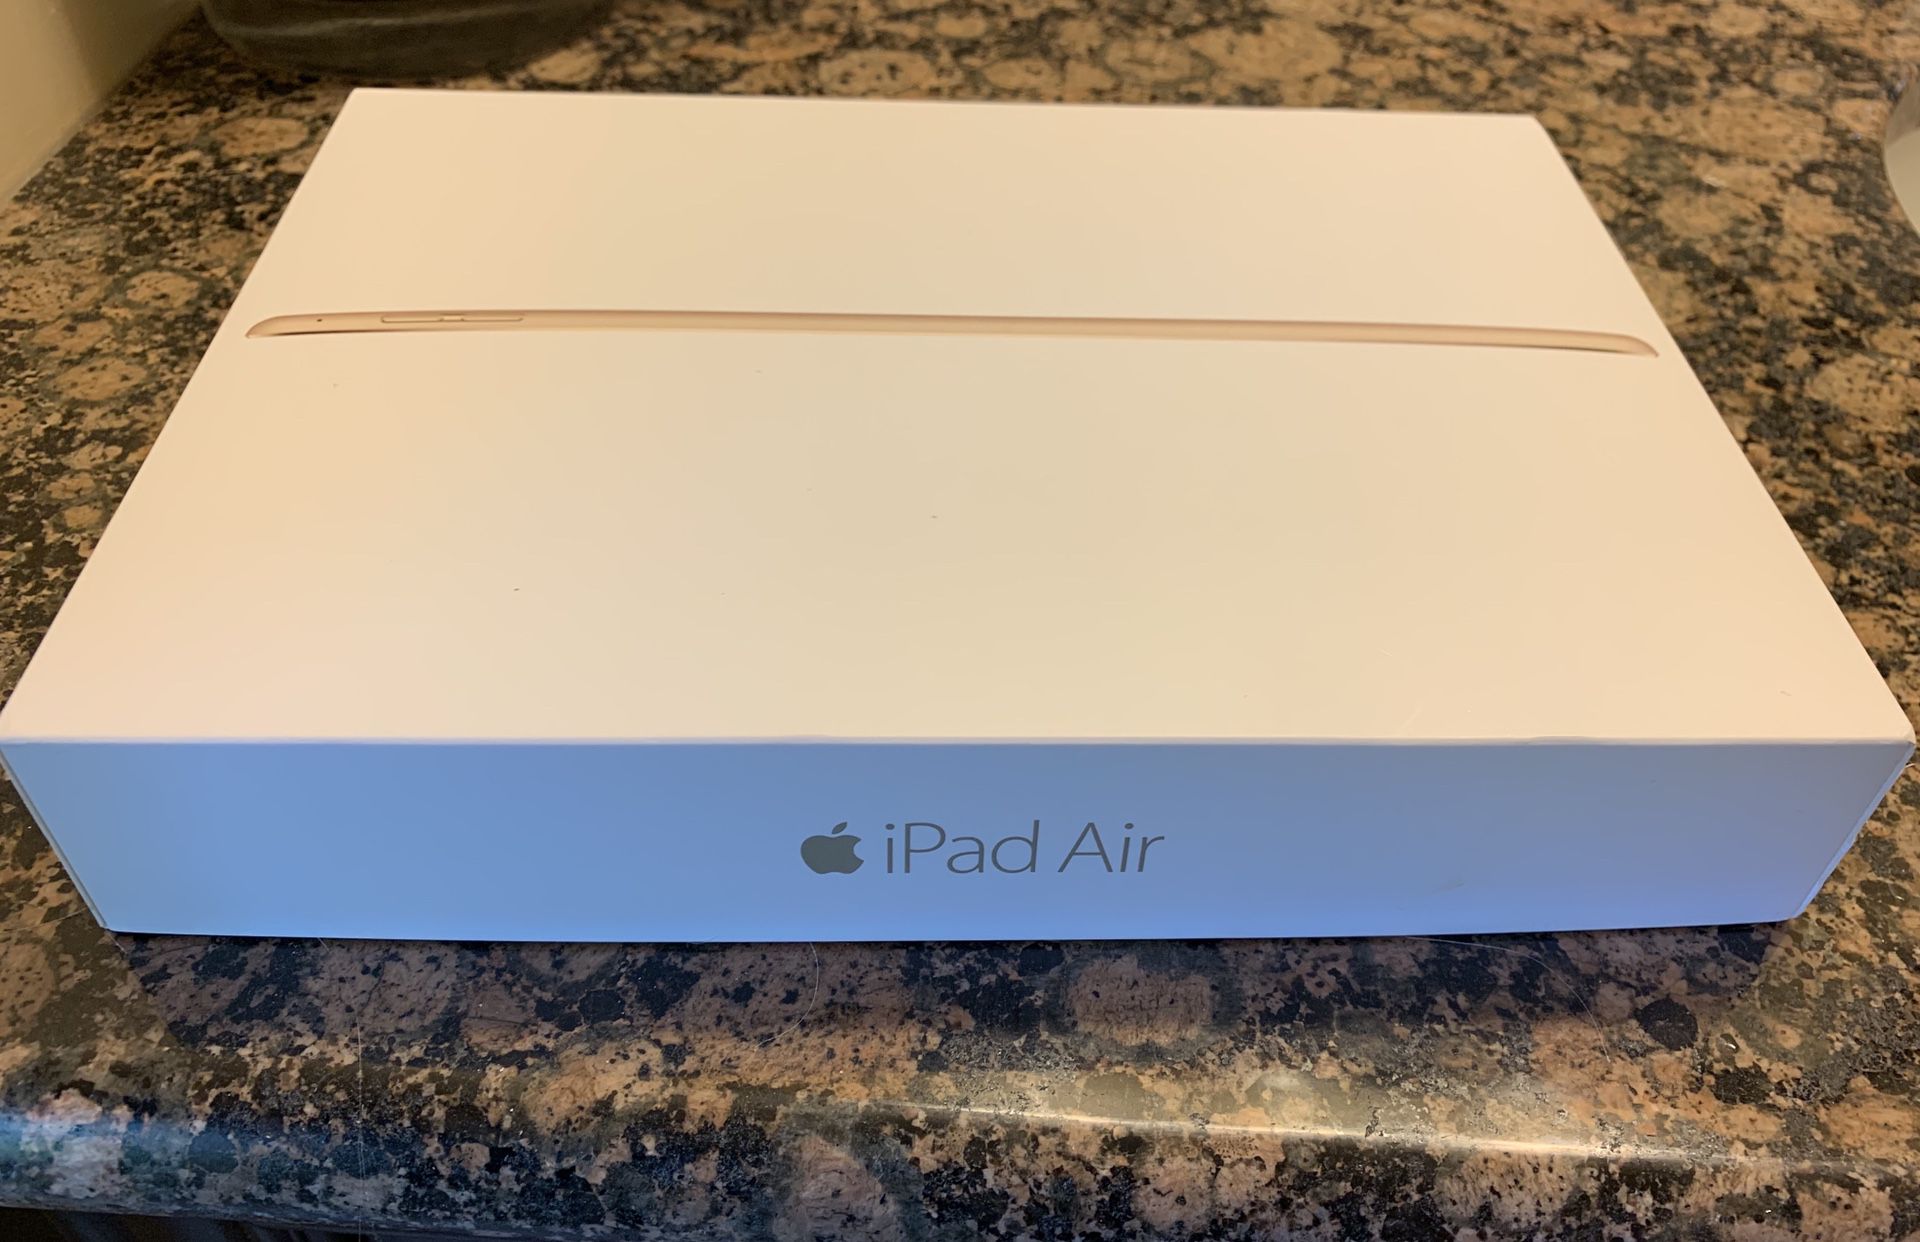 Apple IPad Air 2 with 64 Gigs